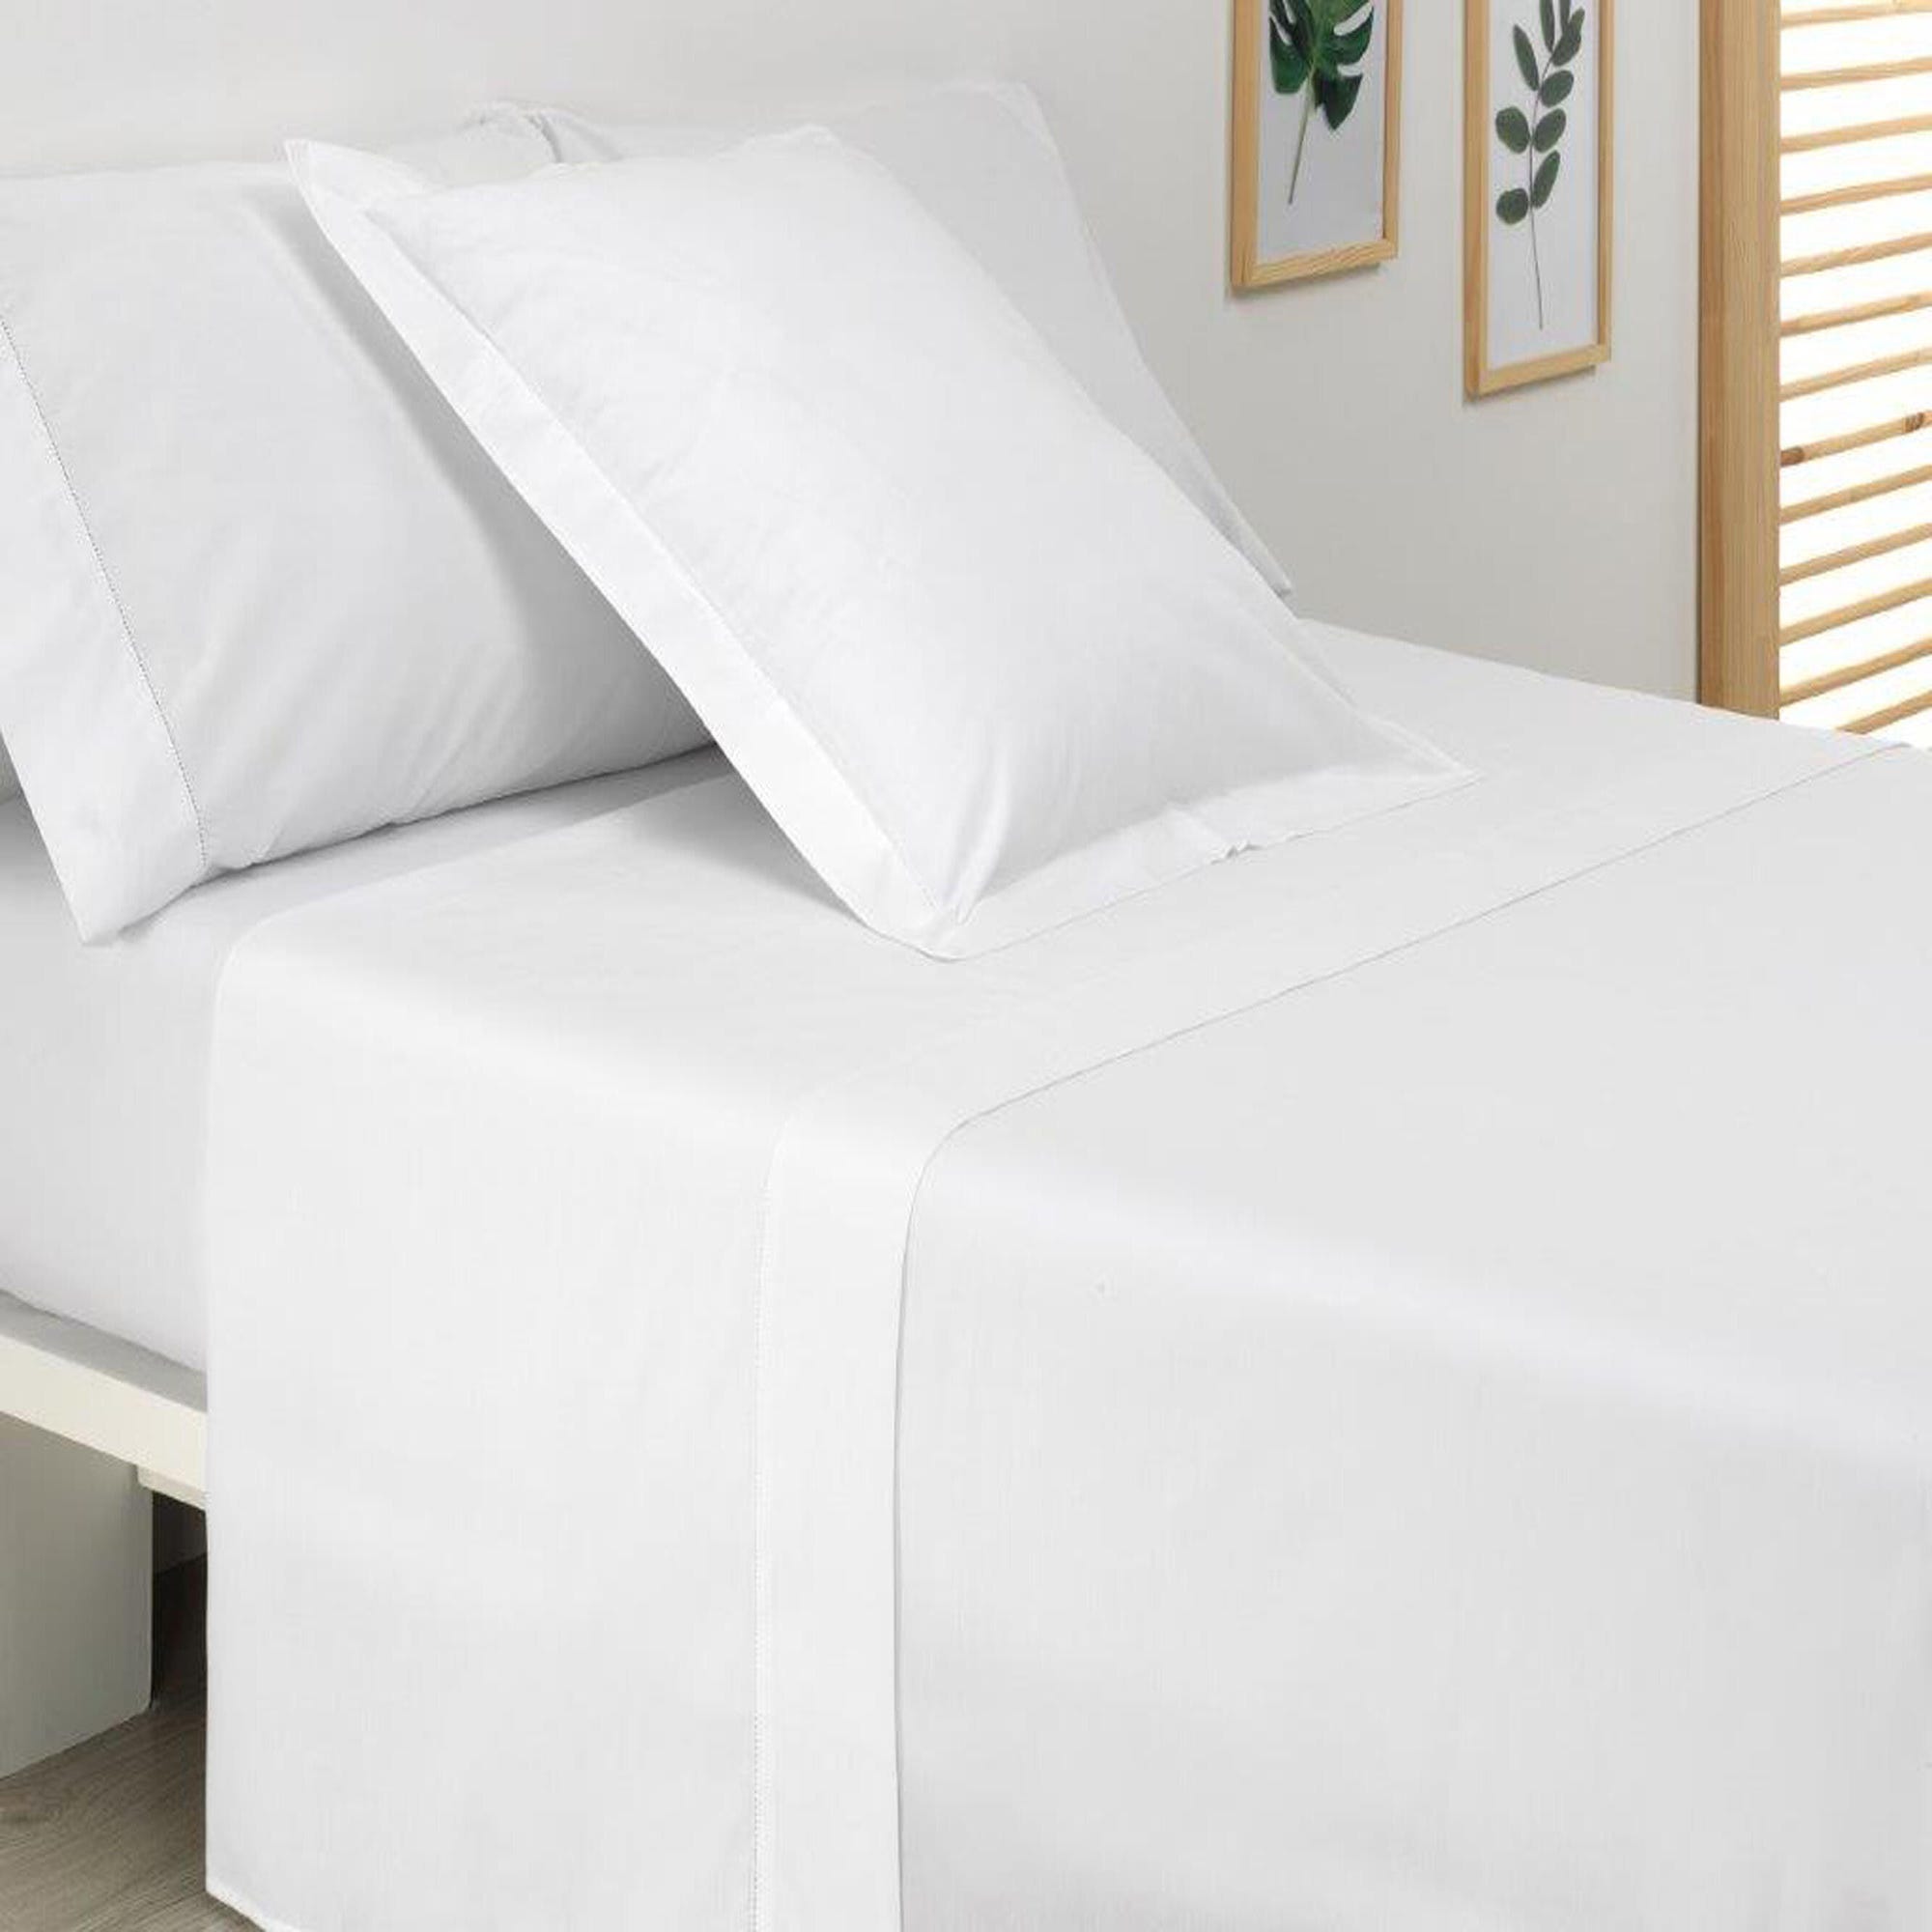 Sábana bajera ajustable hotel blanca popelín Algodón de 200 hilos